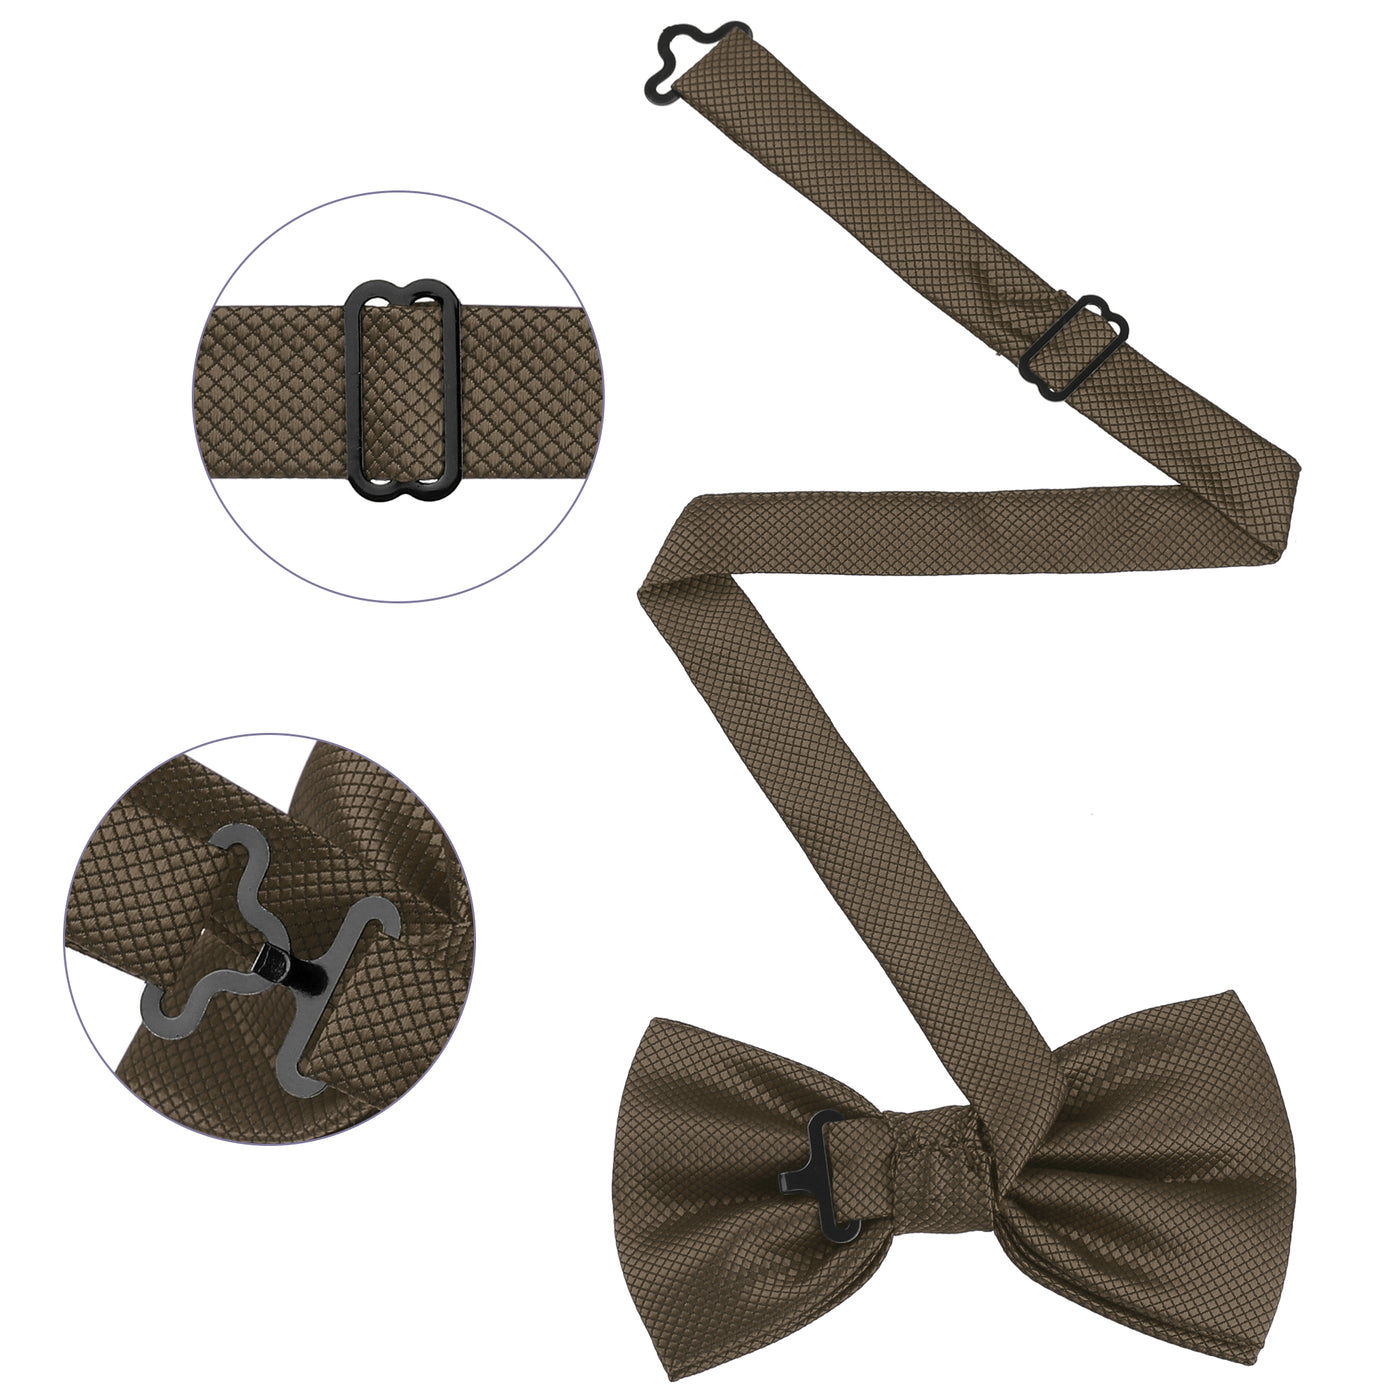 Bublédon Men's Plaid Textured Wedding Party Adjustable Pre-tied Bow Tie